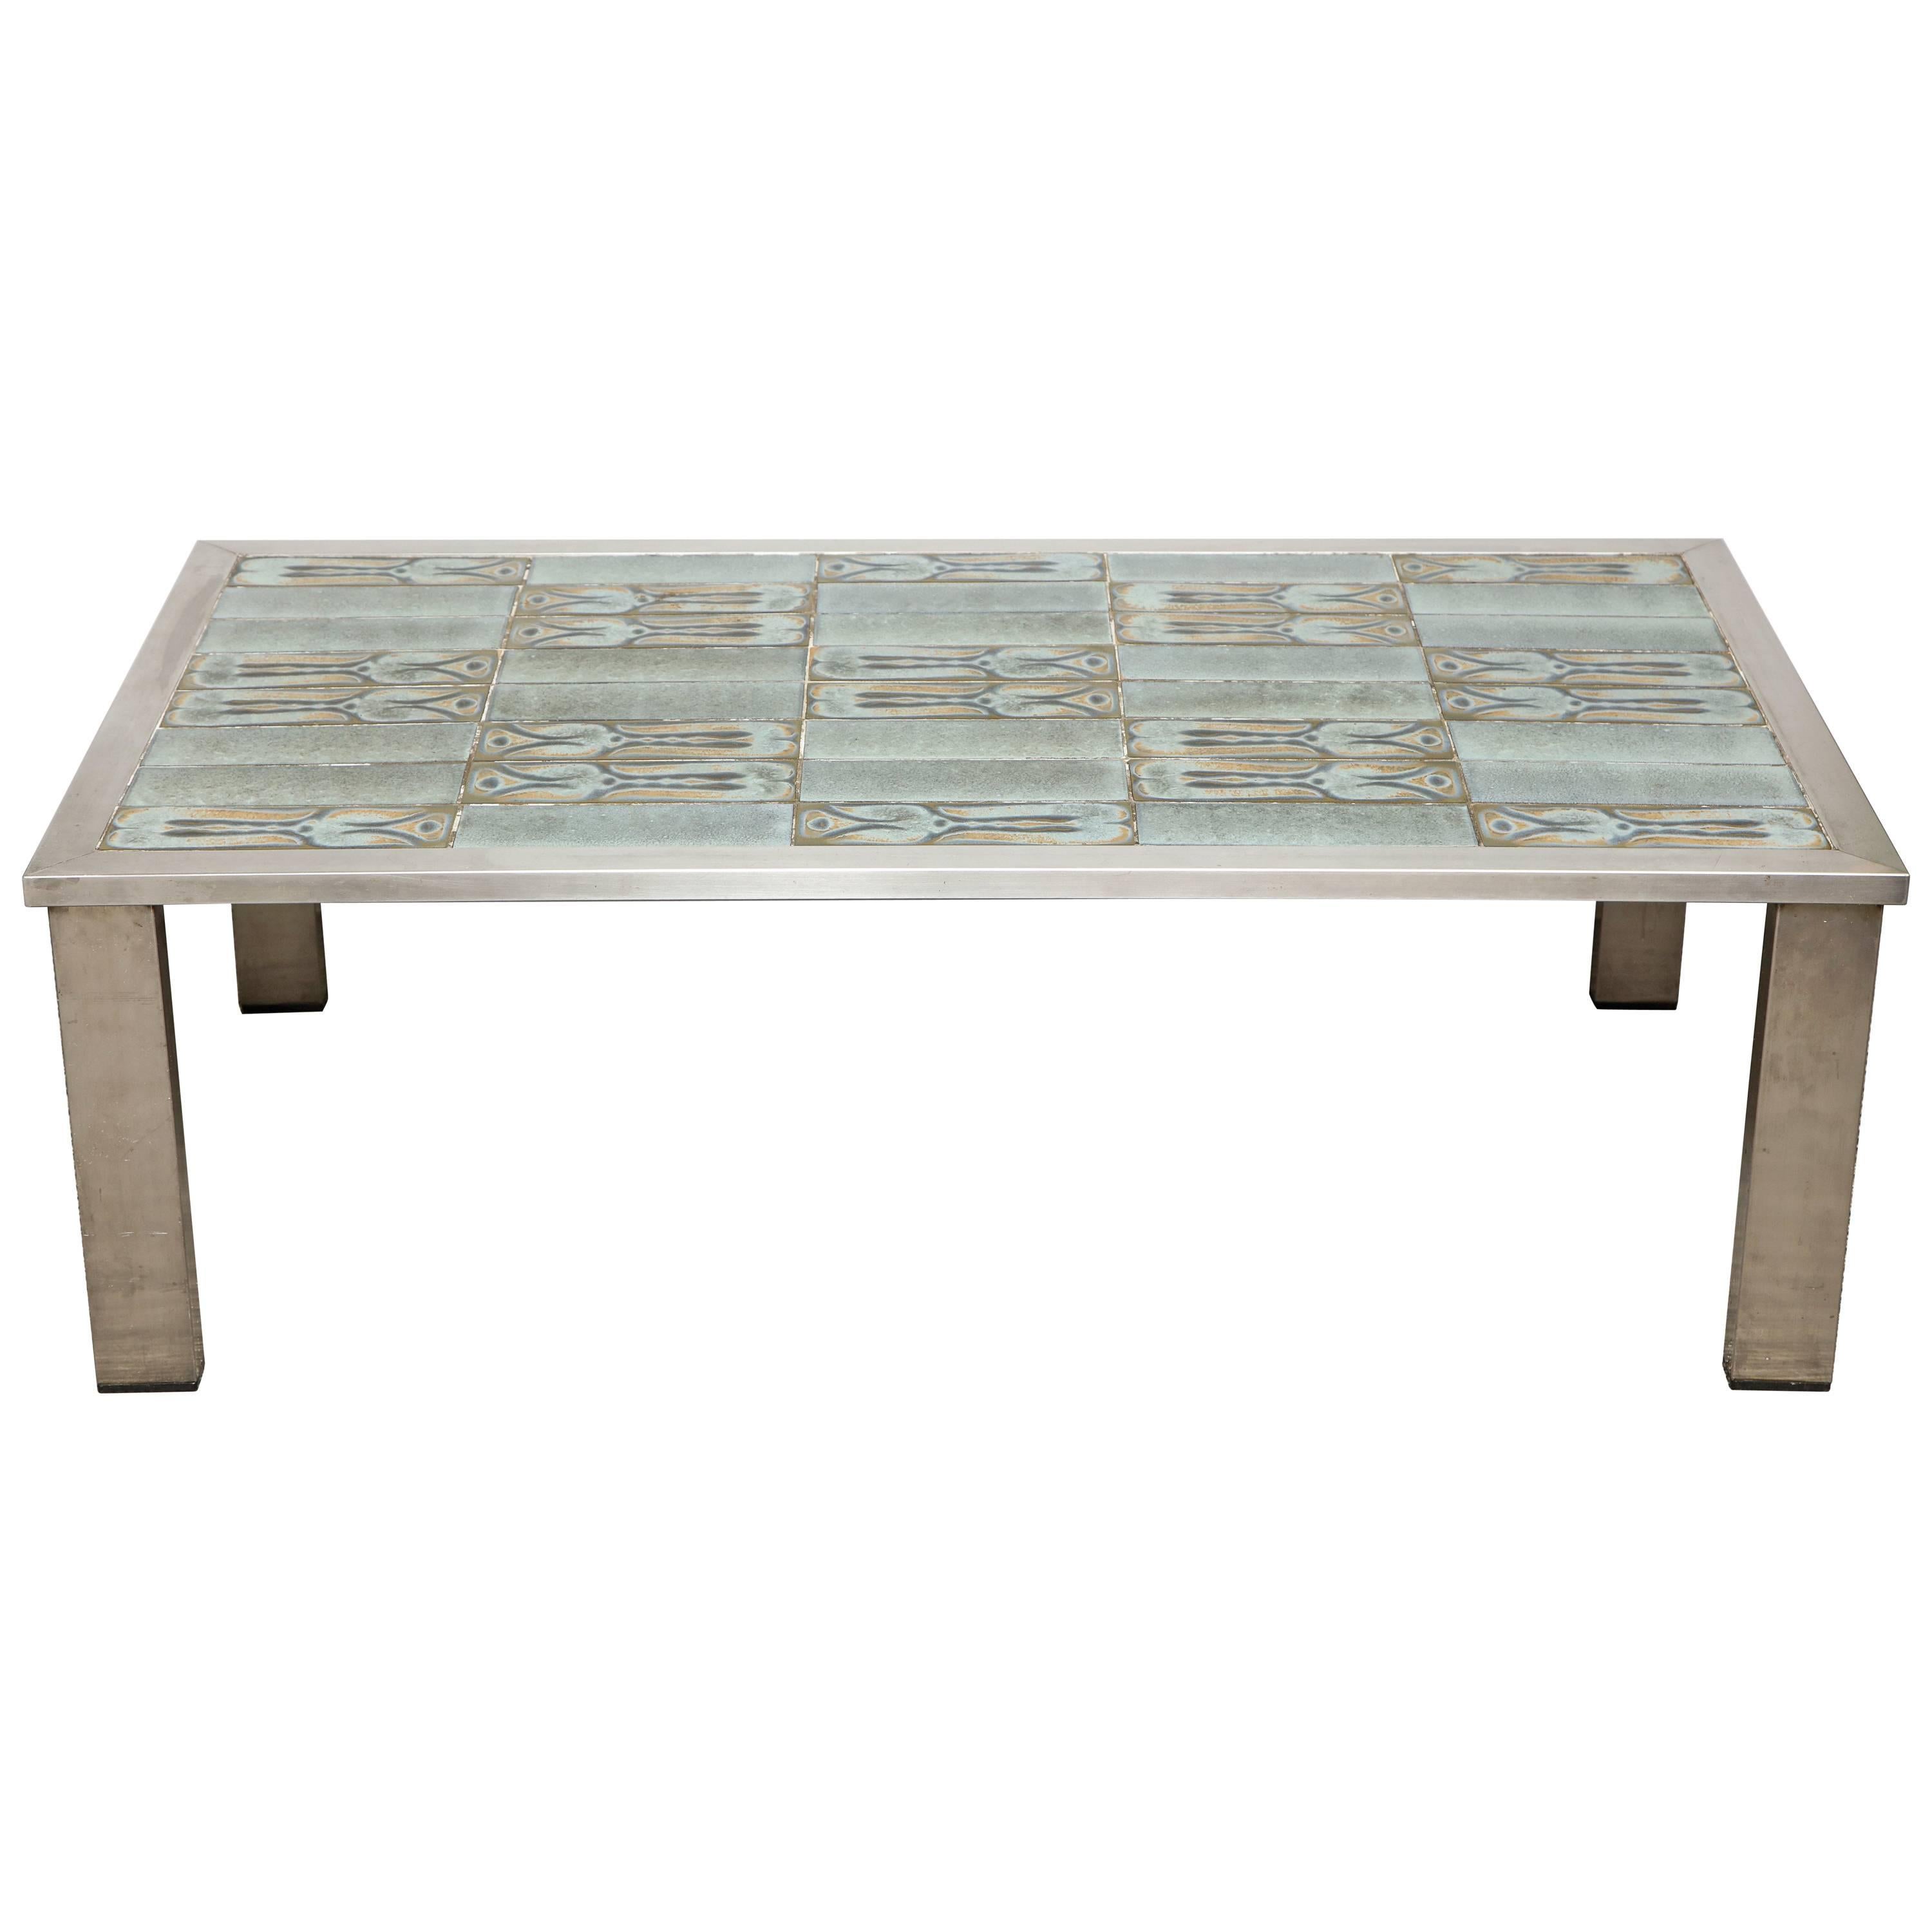 Tiled Topped Table Signed Leleu